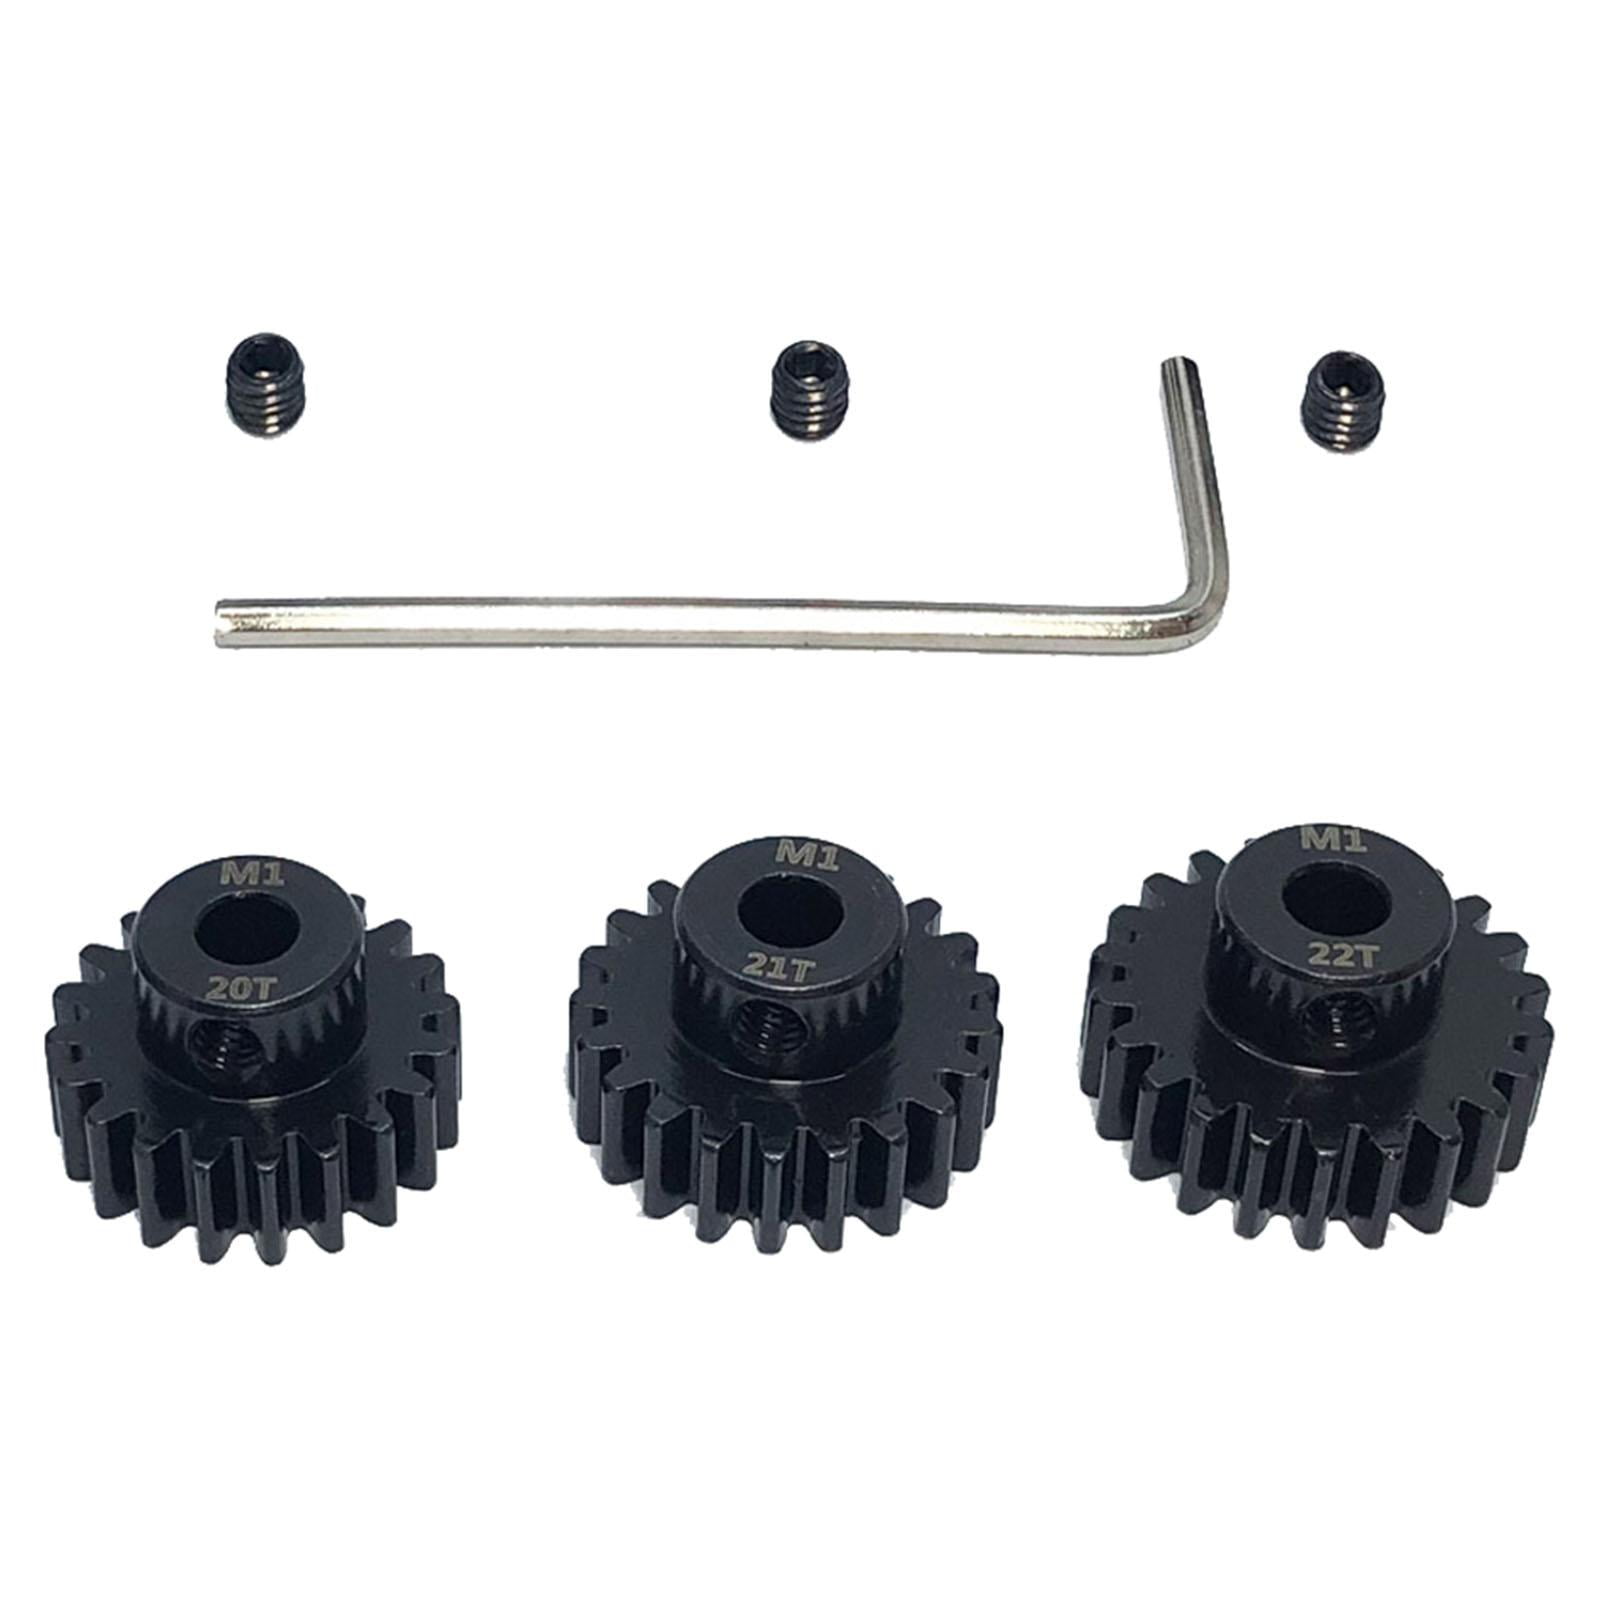 3x Metal Steel 48P Motor Gears Kit for 1/12 1/14 RC Brushless Brushed Motor 